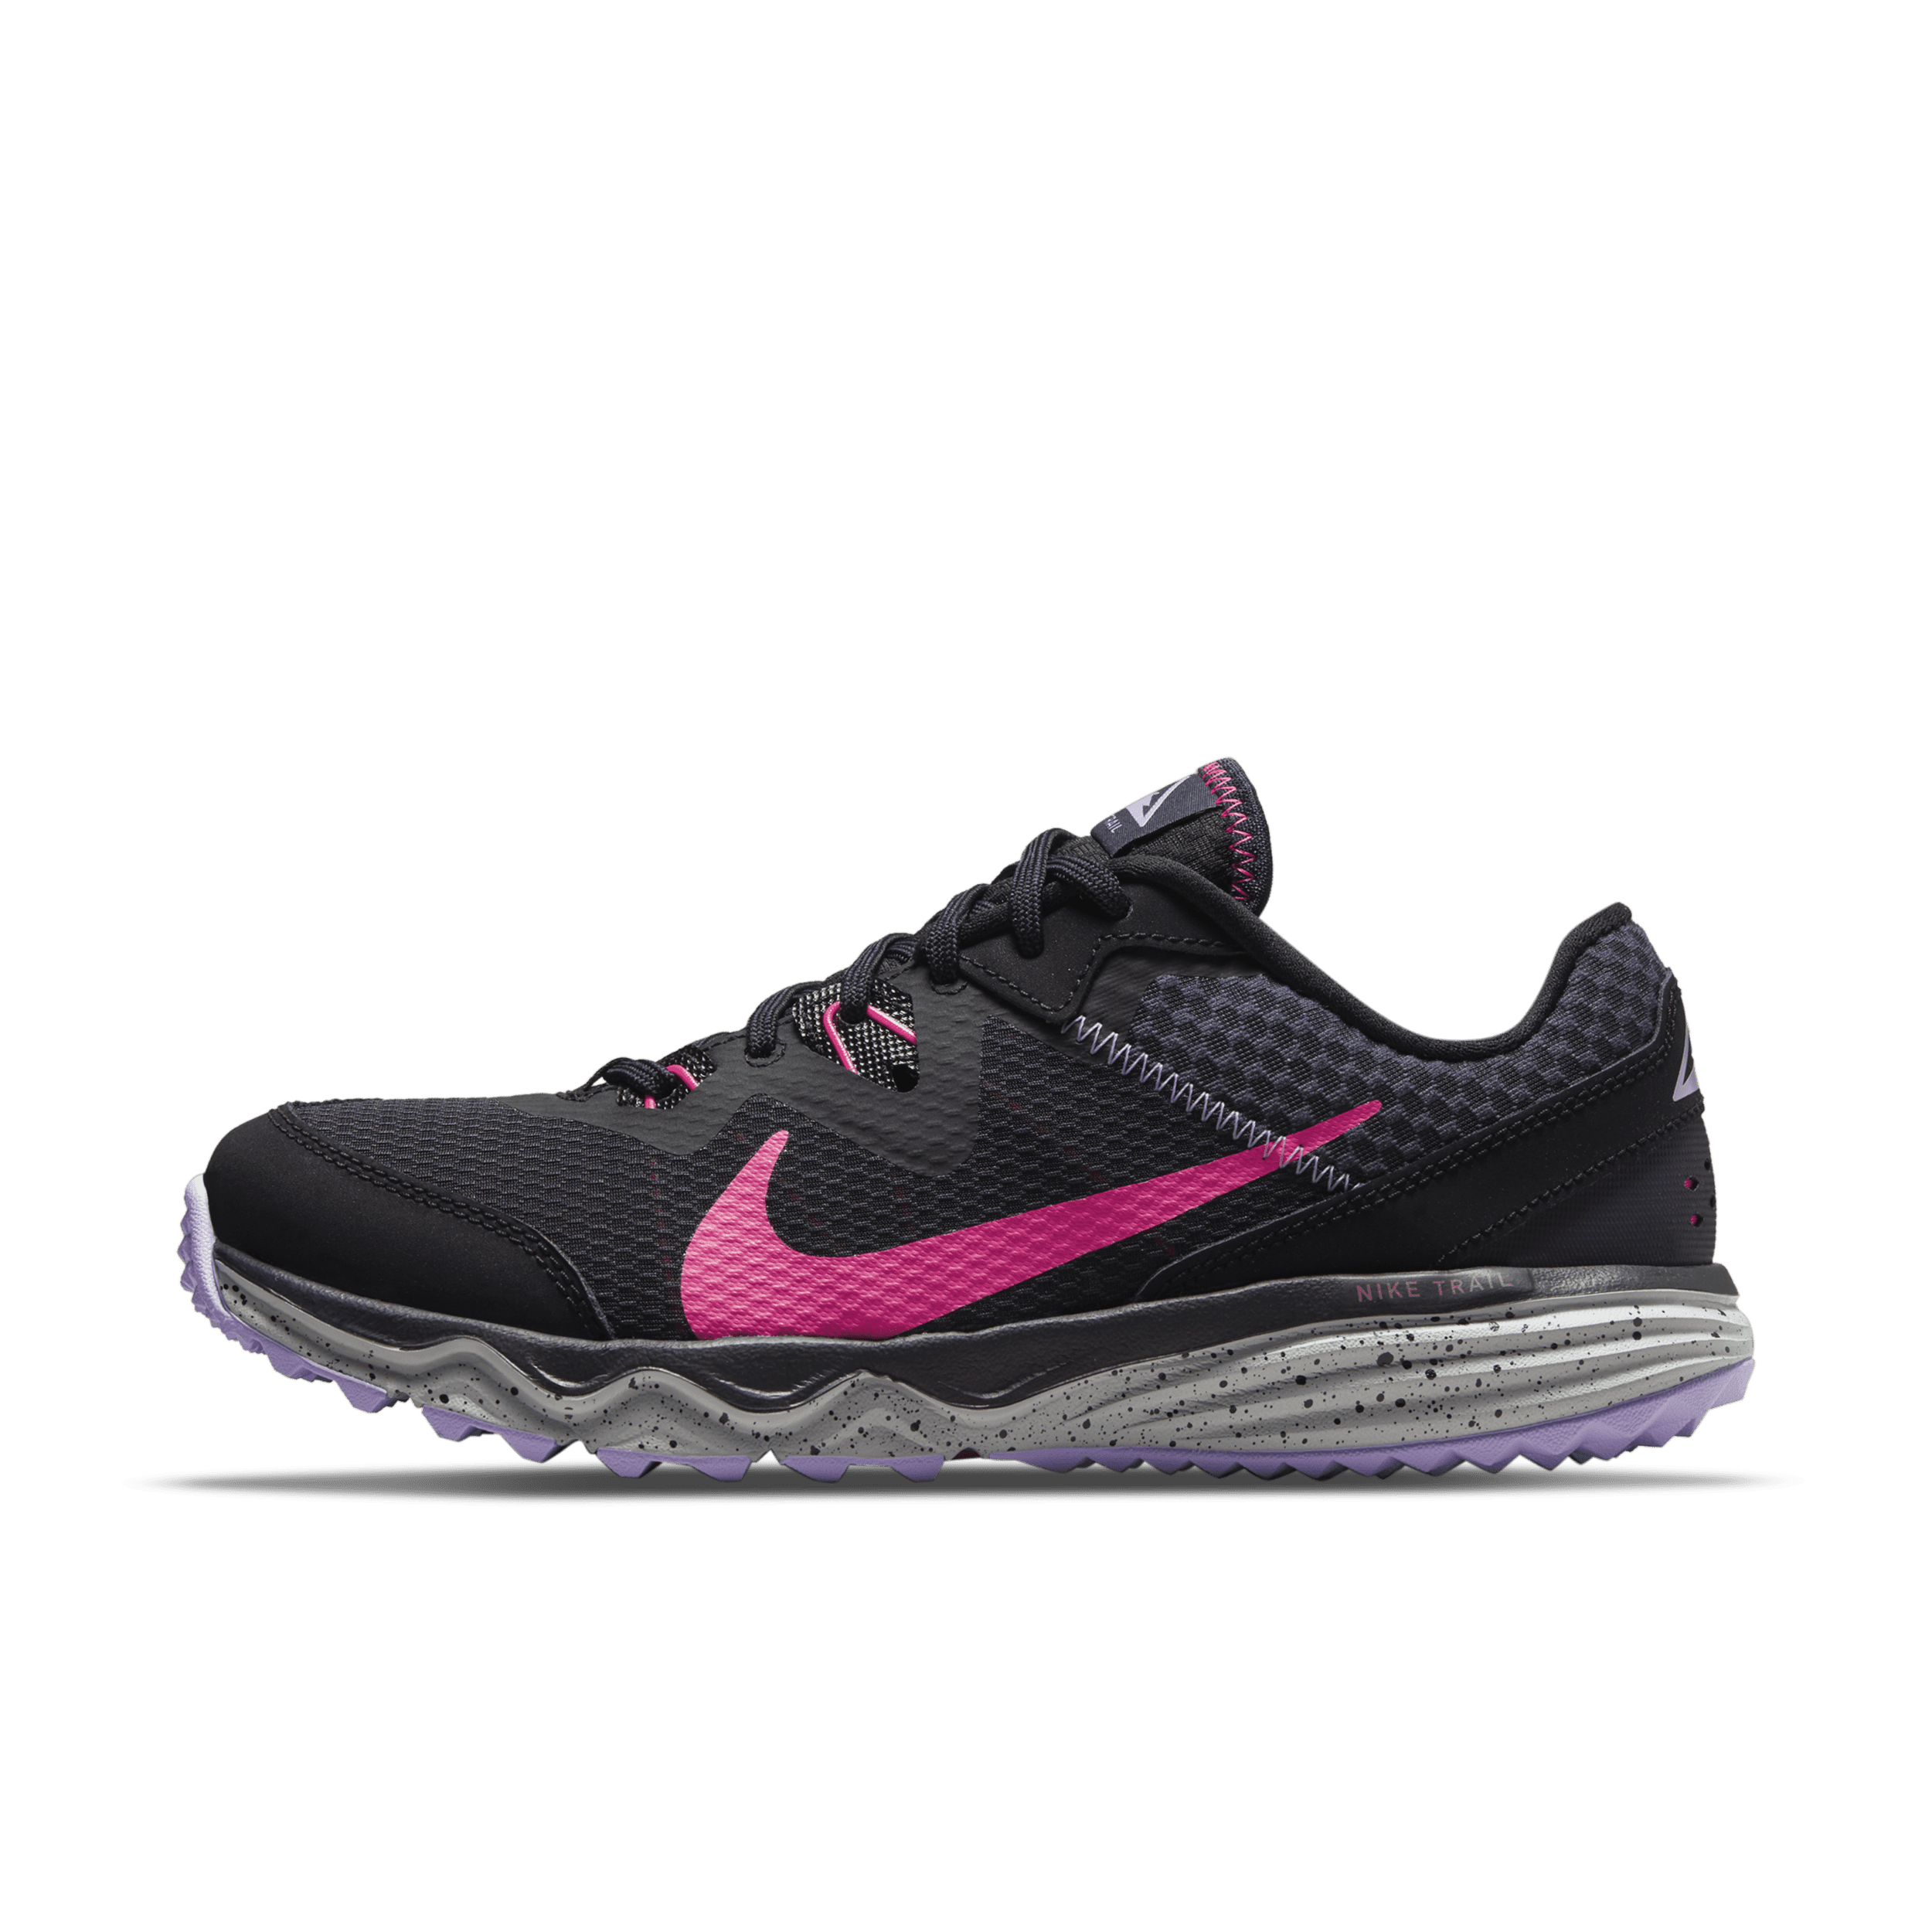 Outlet de de running en Nike mujer negras baratas | Runnea